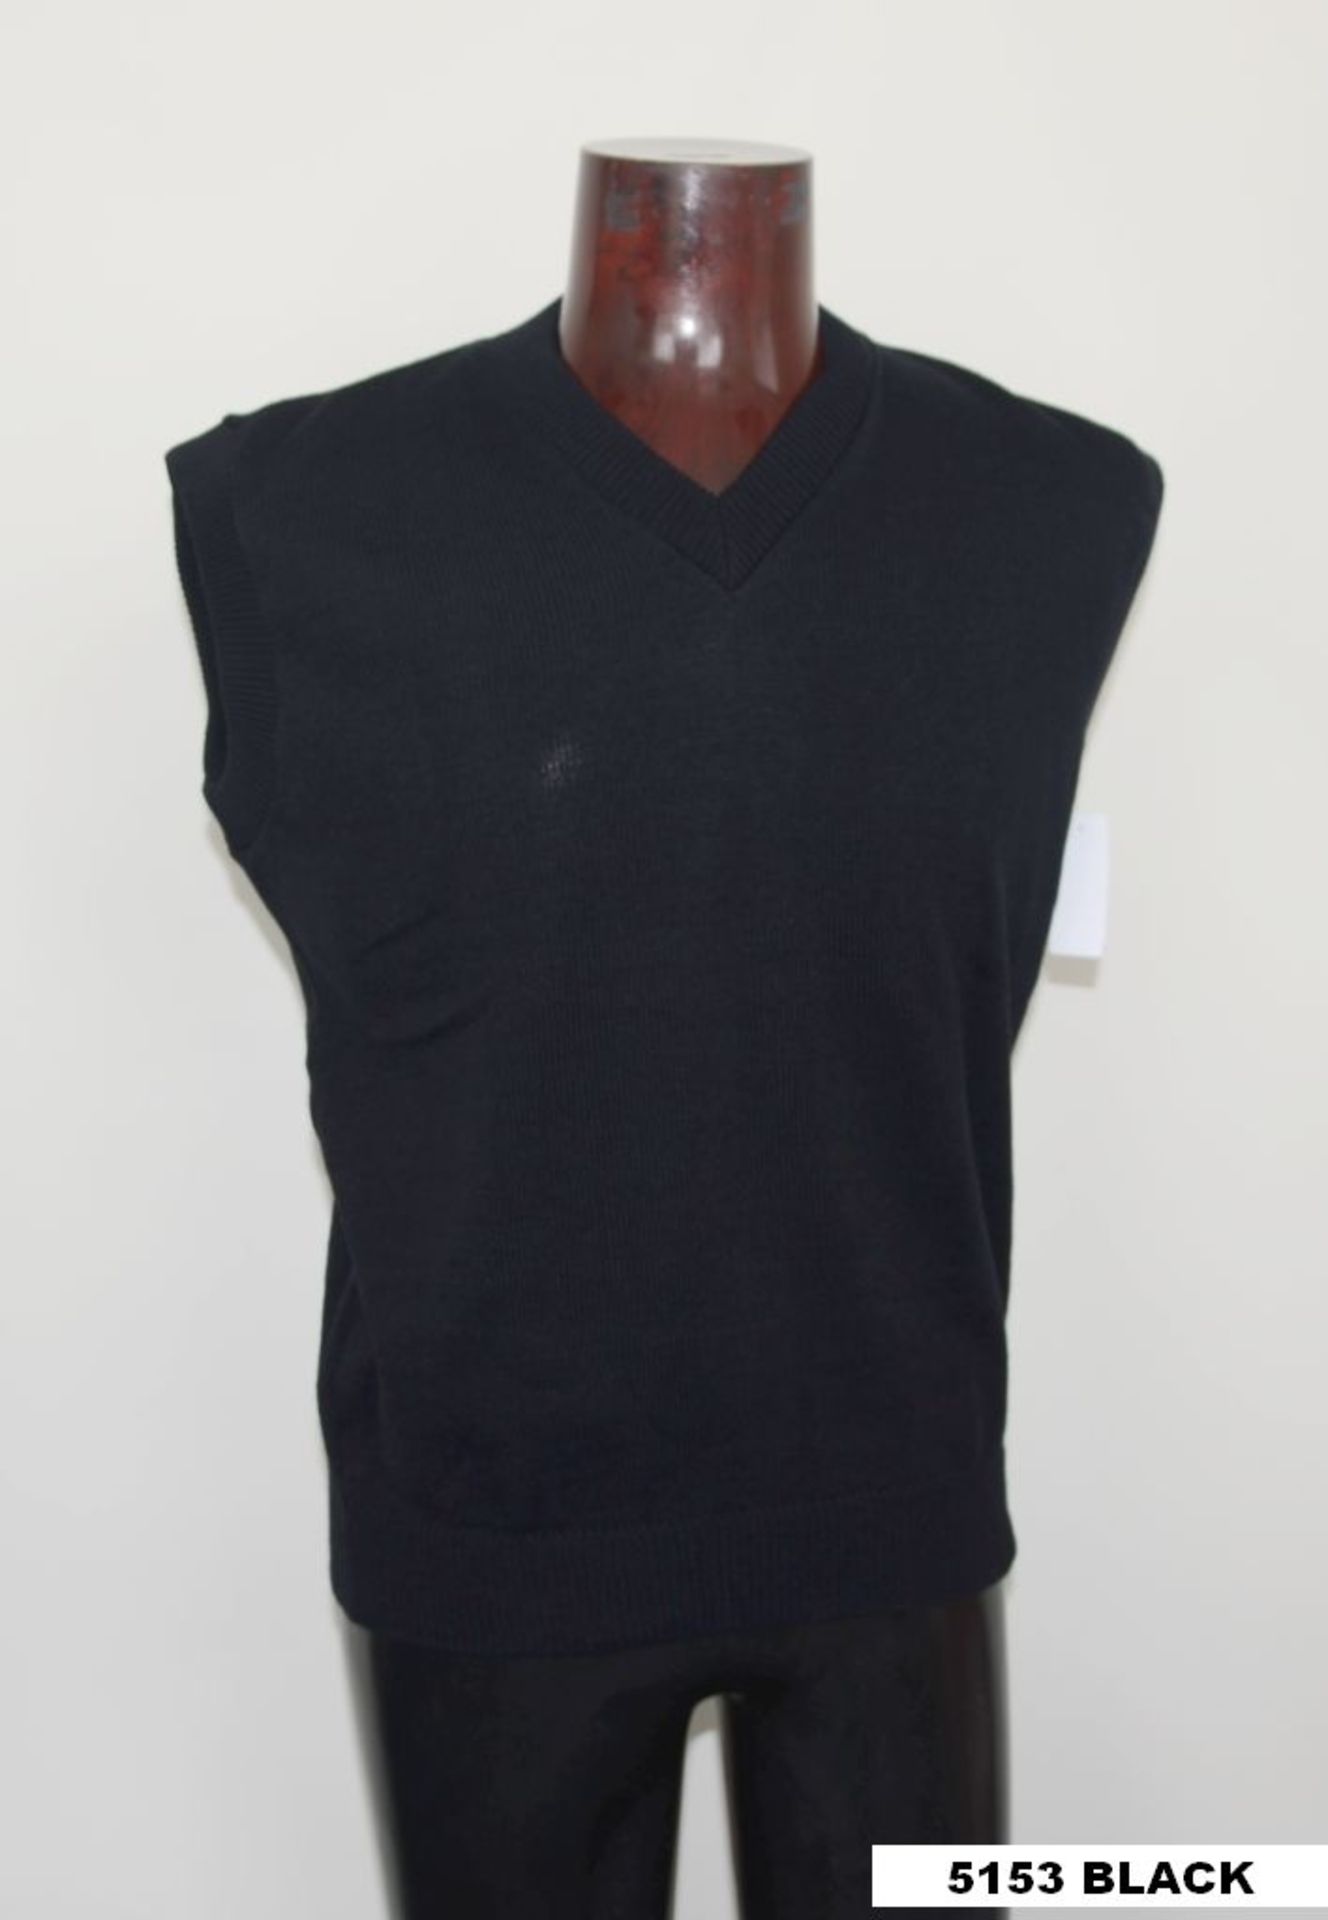 77 x Sweater, V-neck / Black / 5153 BA